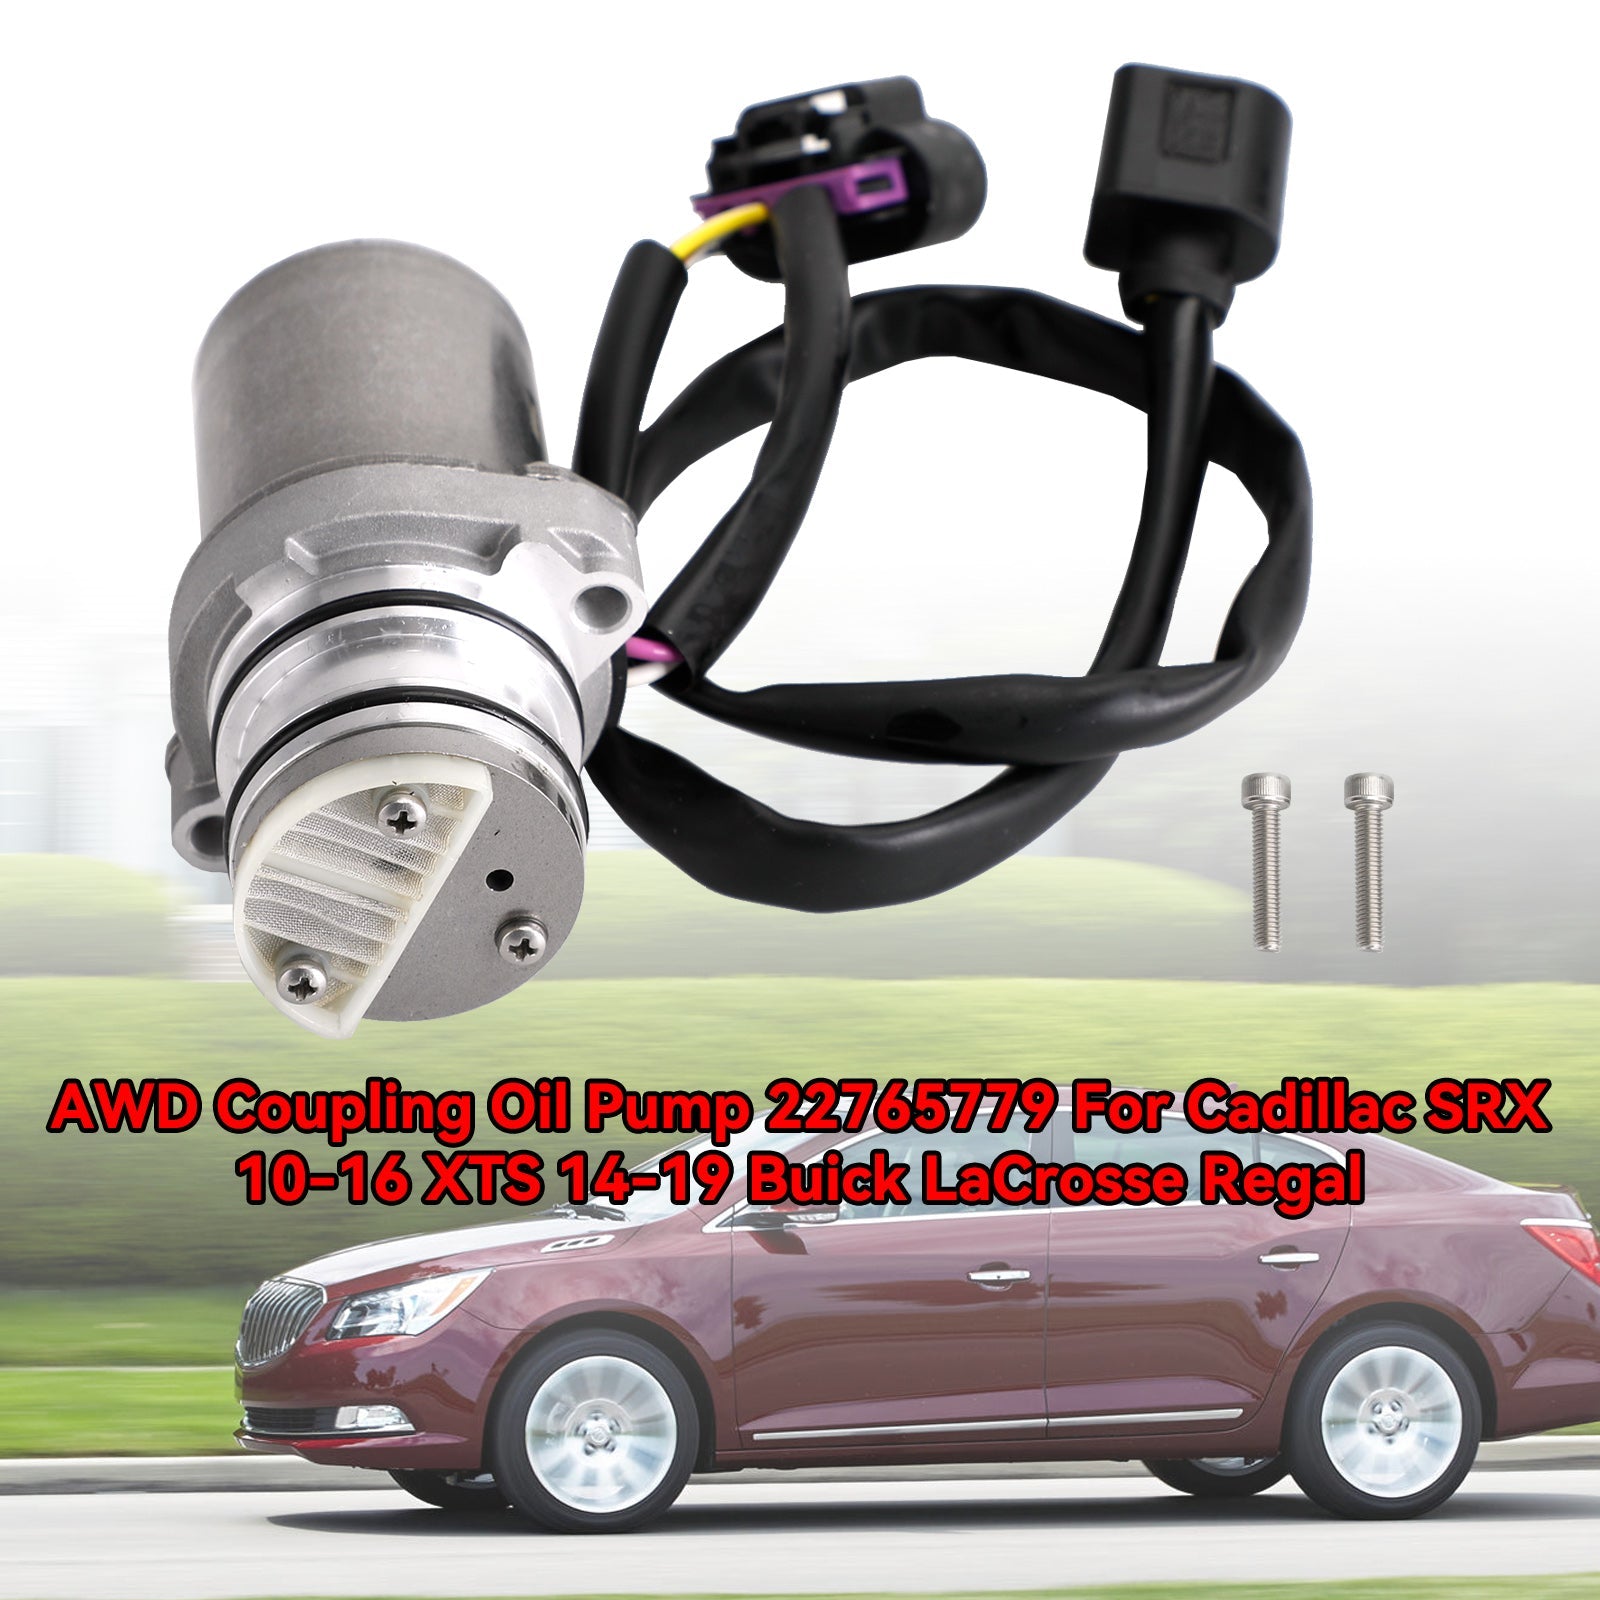 2011-2016 AWD Buick LaCrosse V6 3.6L Couplage Pompe à huile 22765779 404029 13285796 699000